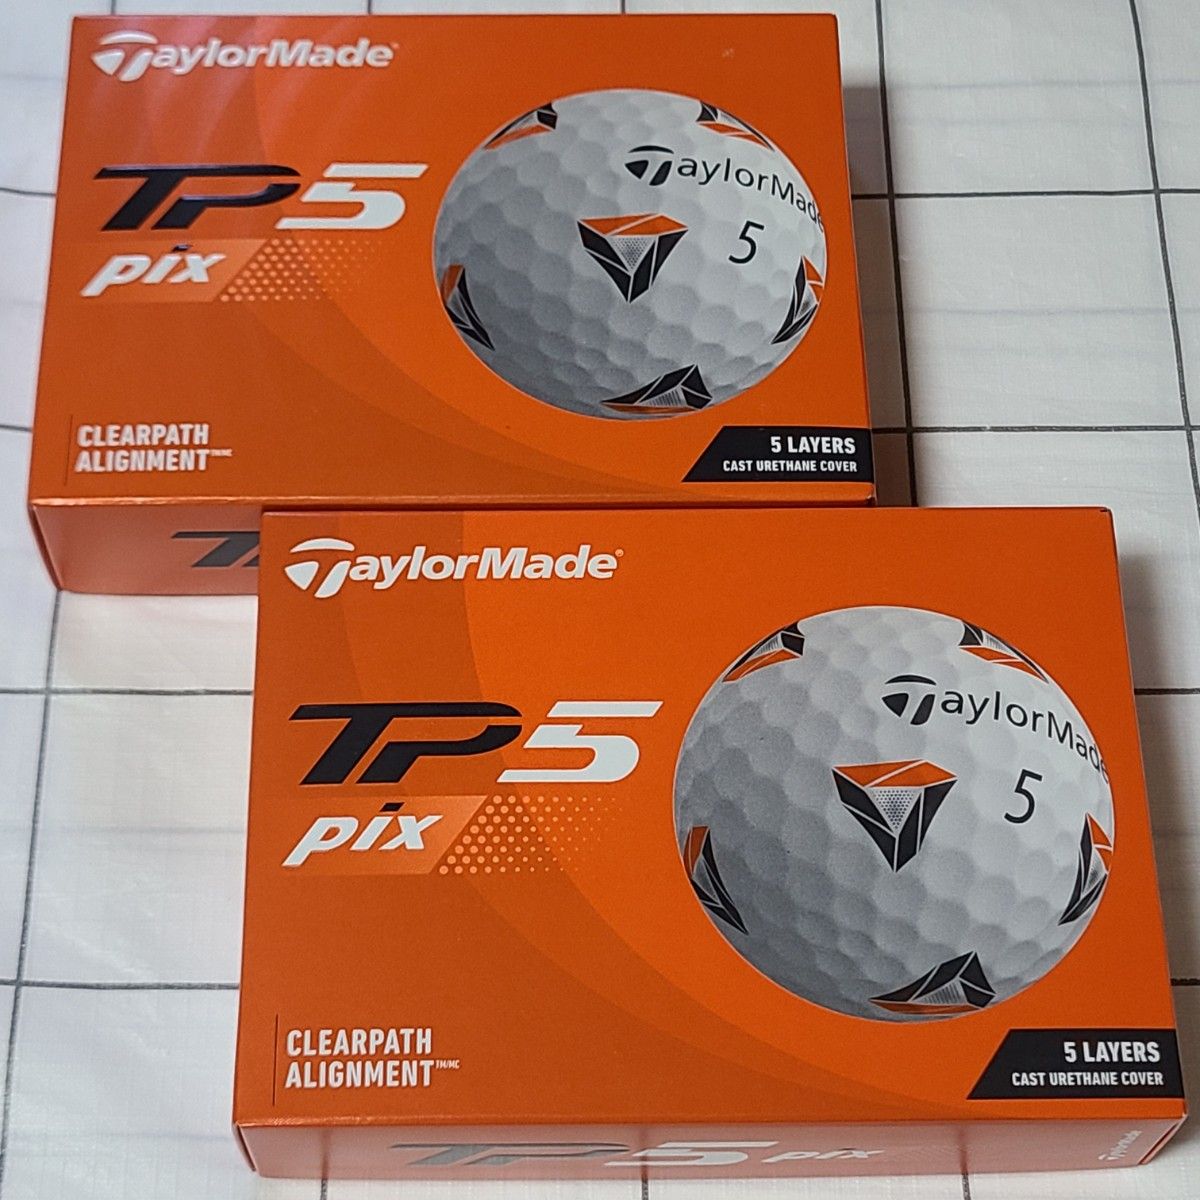 TaylorMade テーラーメイド TP5x pix 2021年モデル ゴルフボール 2ダース